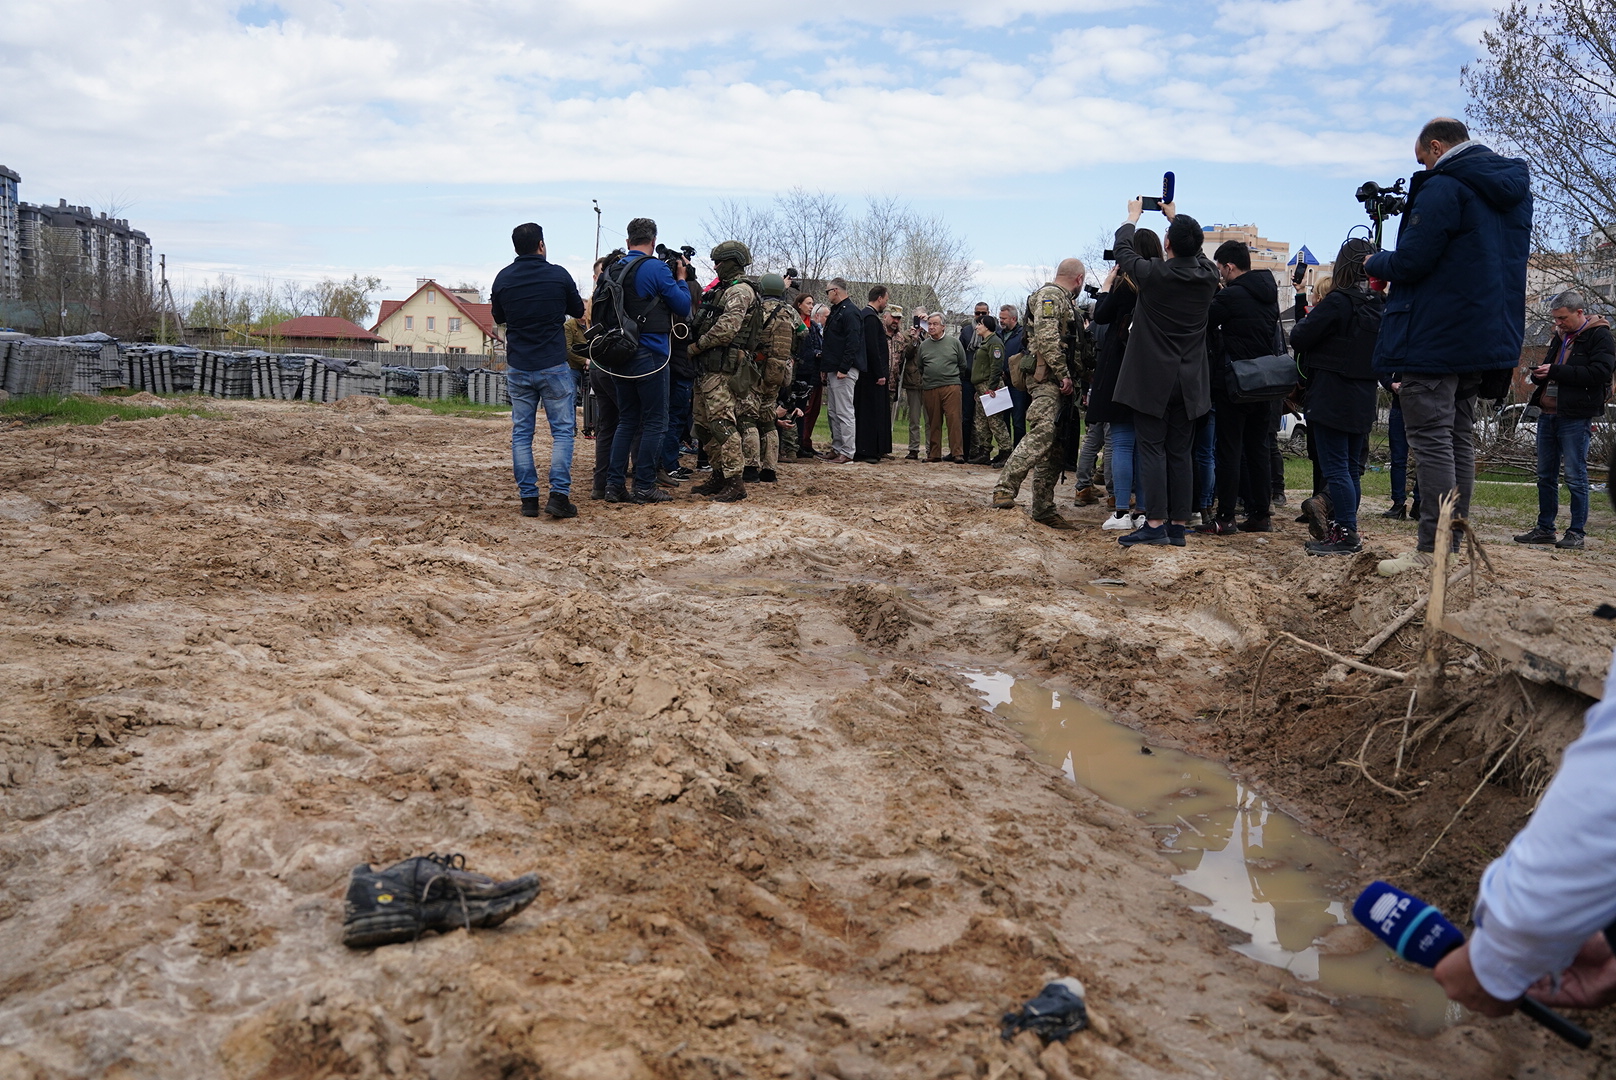 Antonio Guterres visited mass graves in Pucha